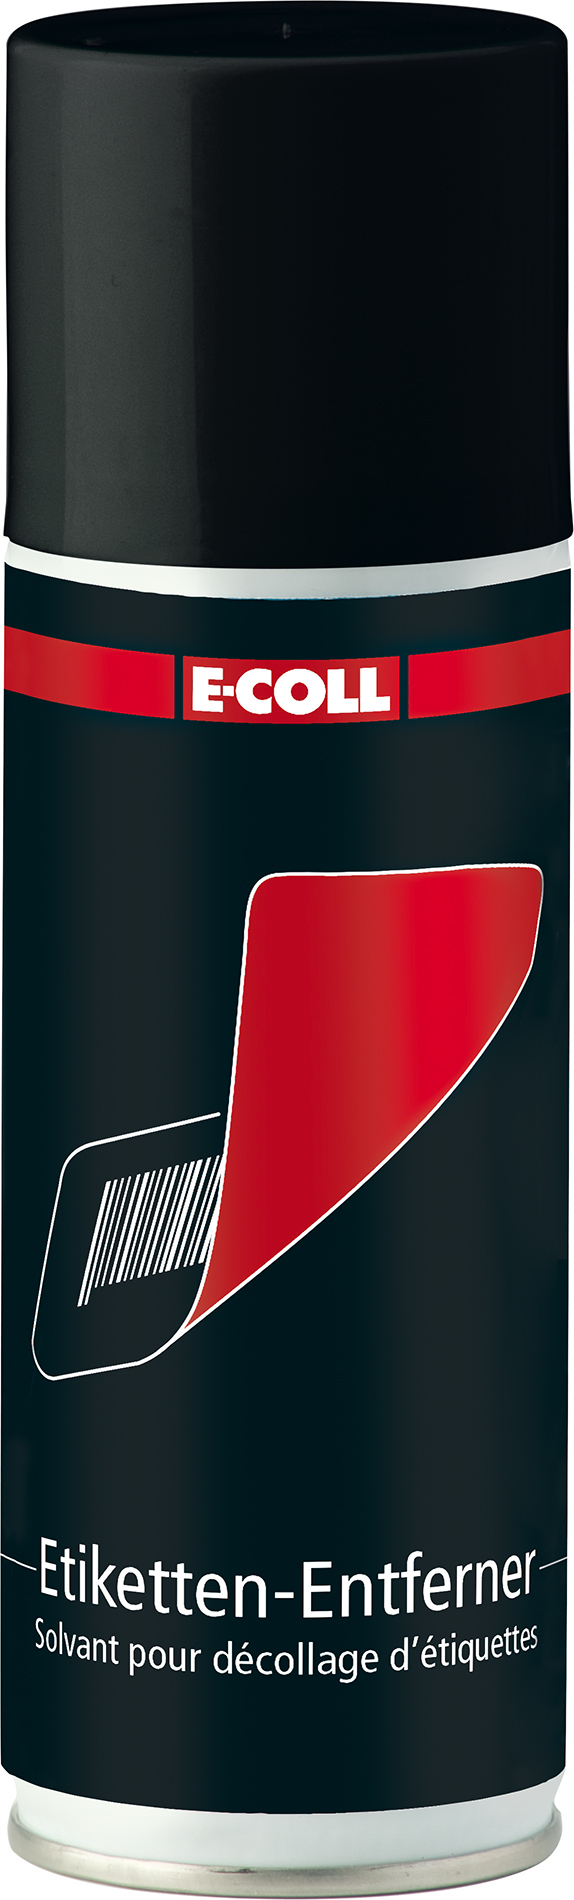 E-COLL Etikettenentferner 200ml